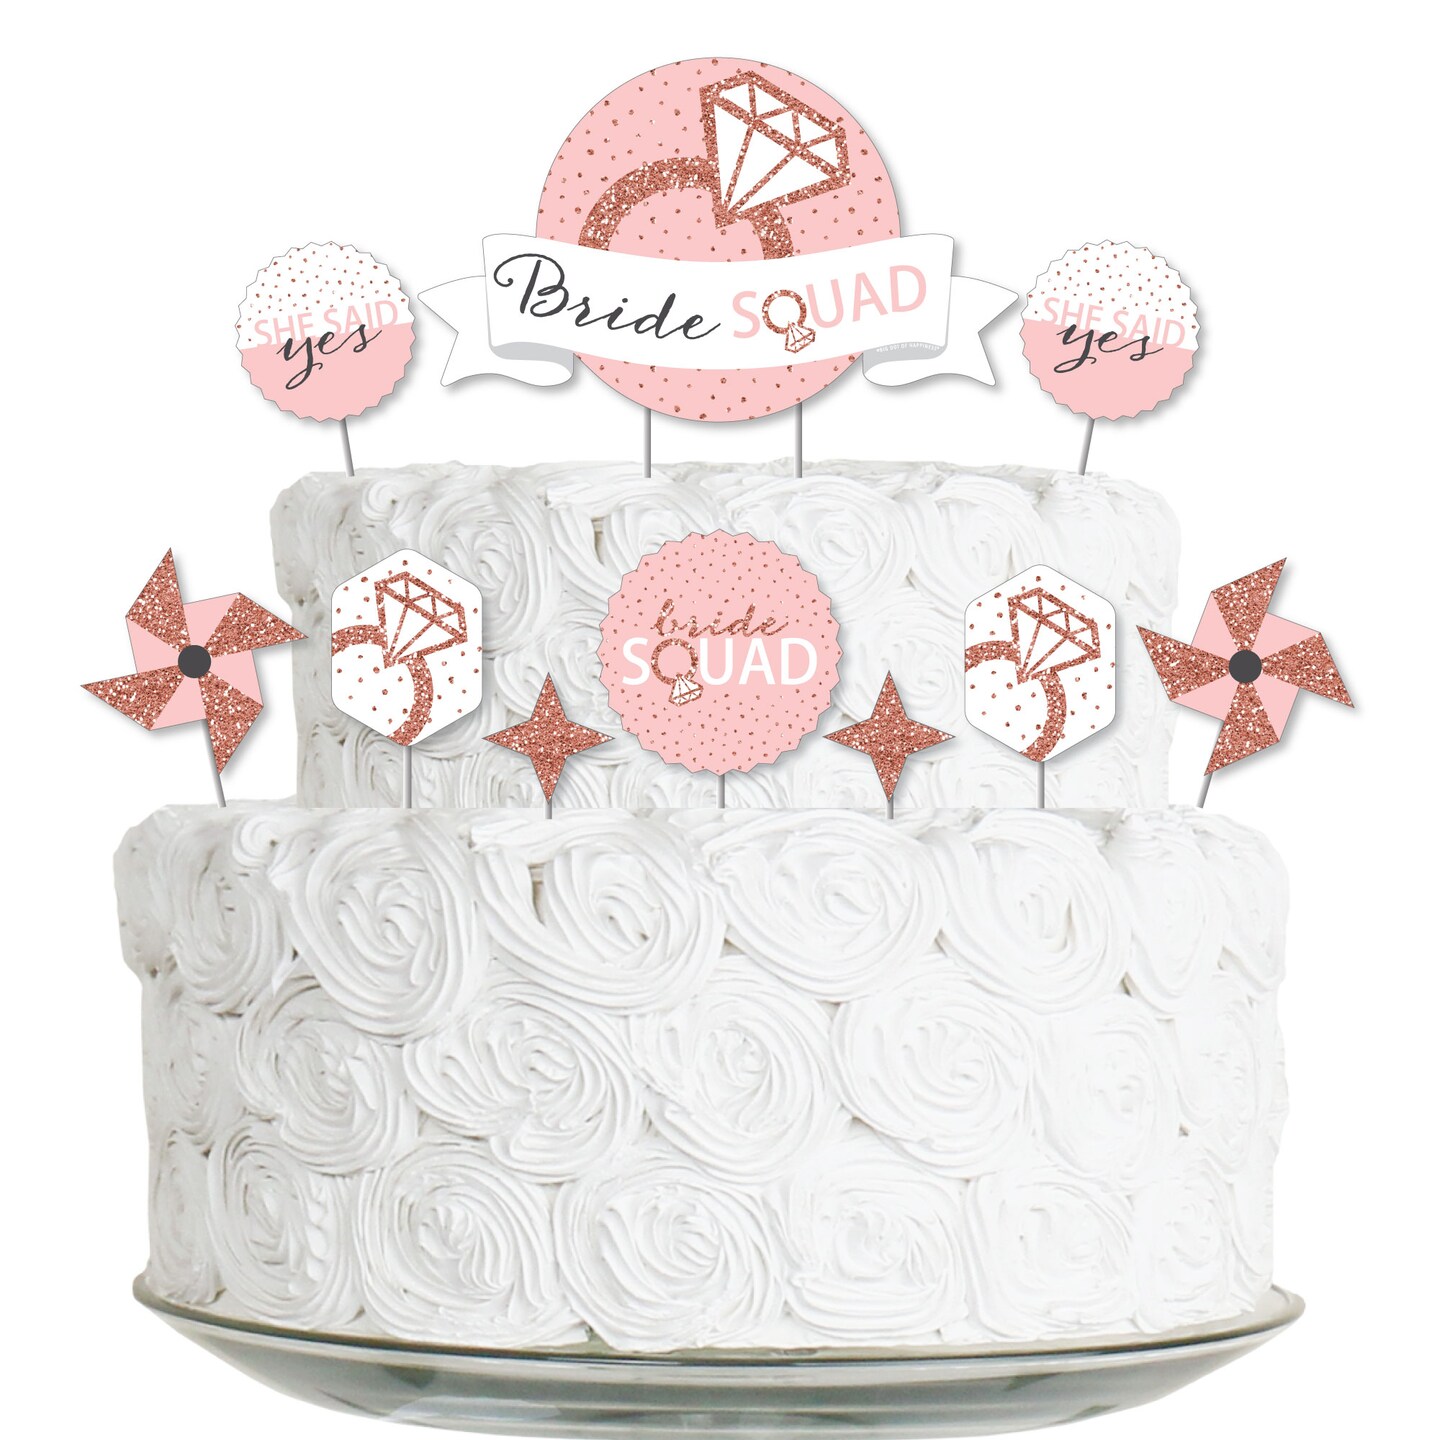 Big Dot of Happiness Bride Squad - Rose Gold Bridal Shower or Bachelorette Party  Cake Decorating Kit - Bride Squad Cake Topper Set - 11 Pieces | Michaels